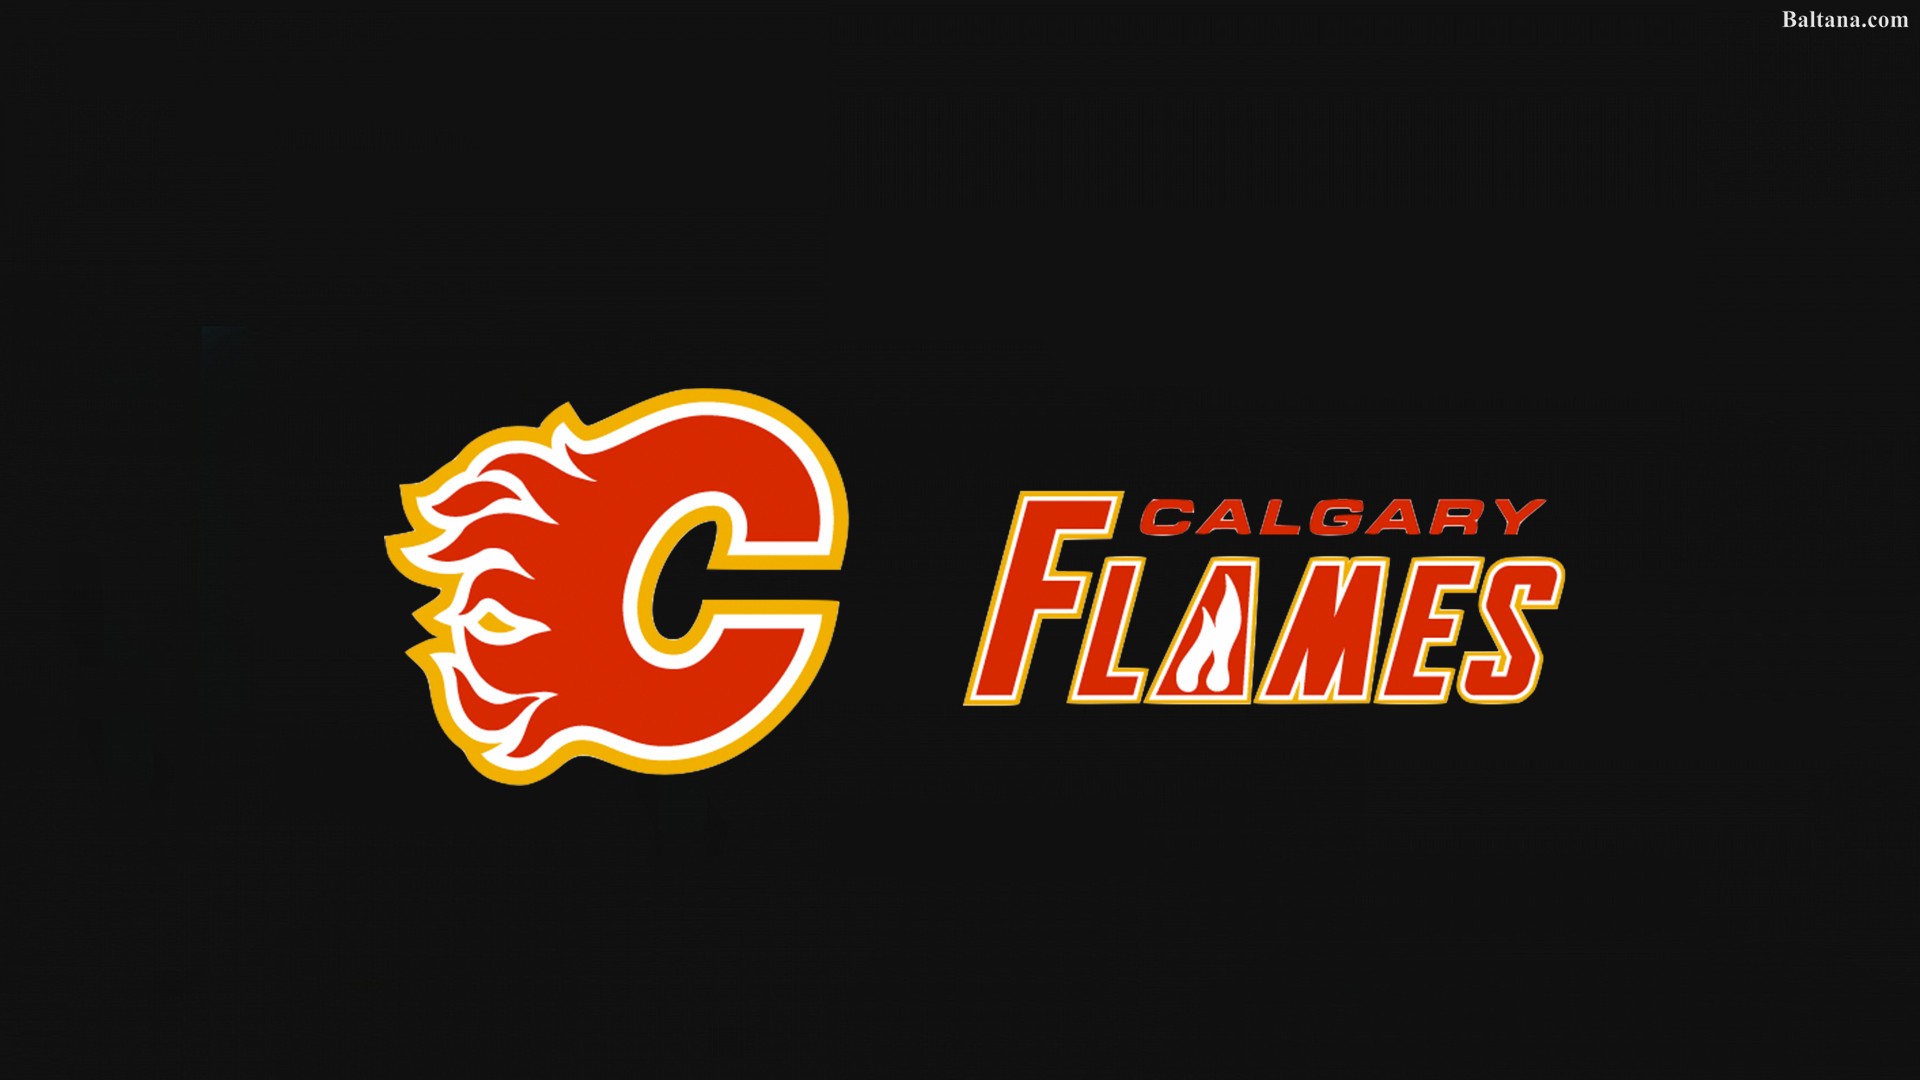 Calgary Flames Background Wallpaper   Calgary Flames Wall Paper